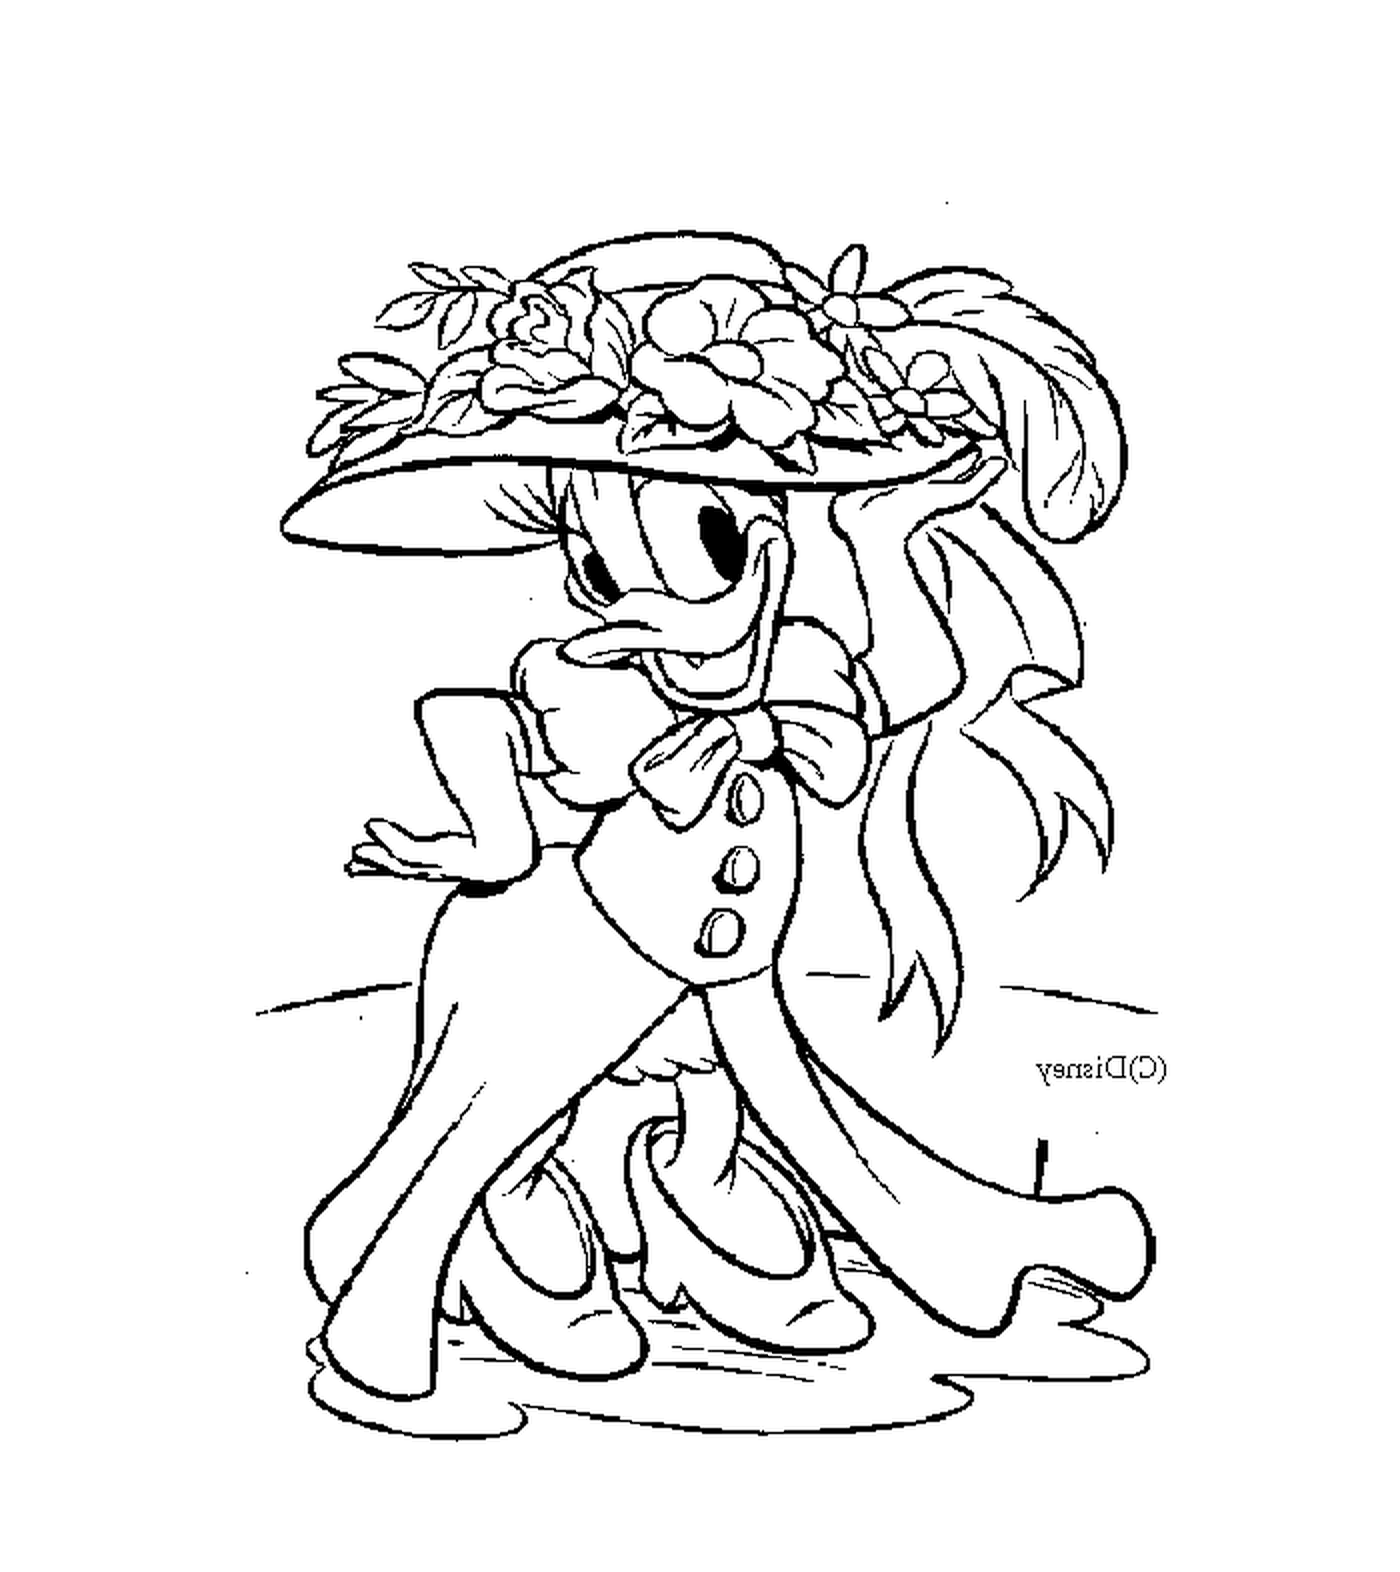  Daisy, elegant with her big hat 